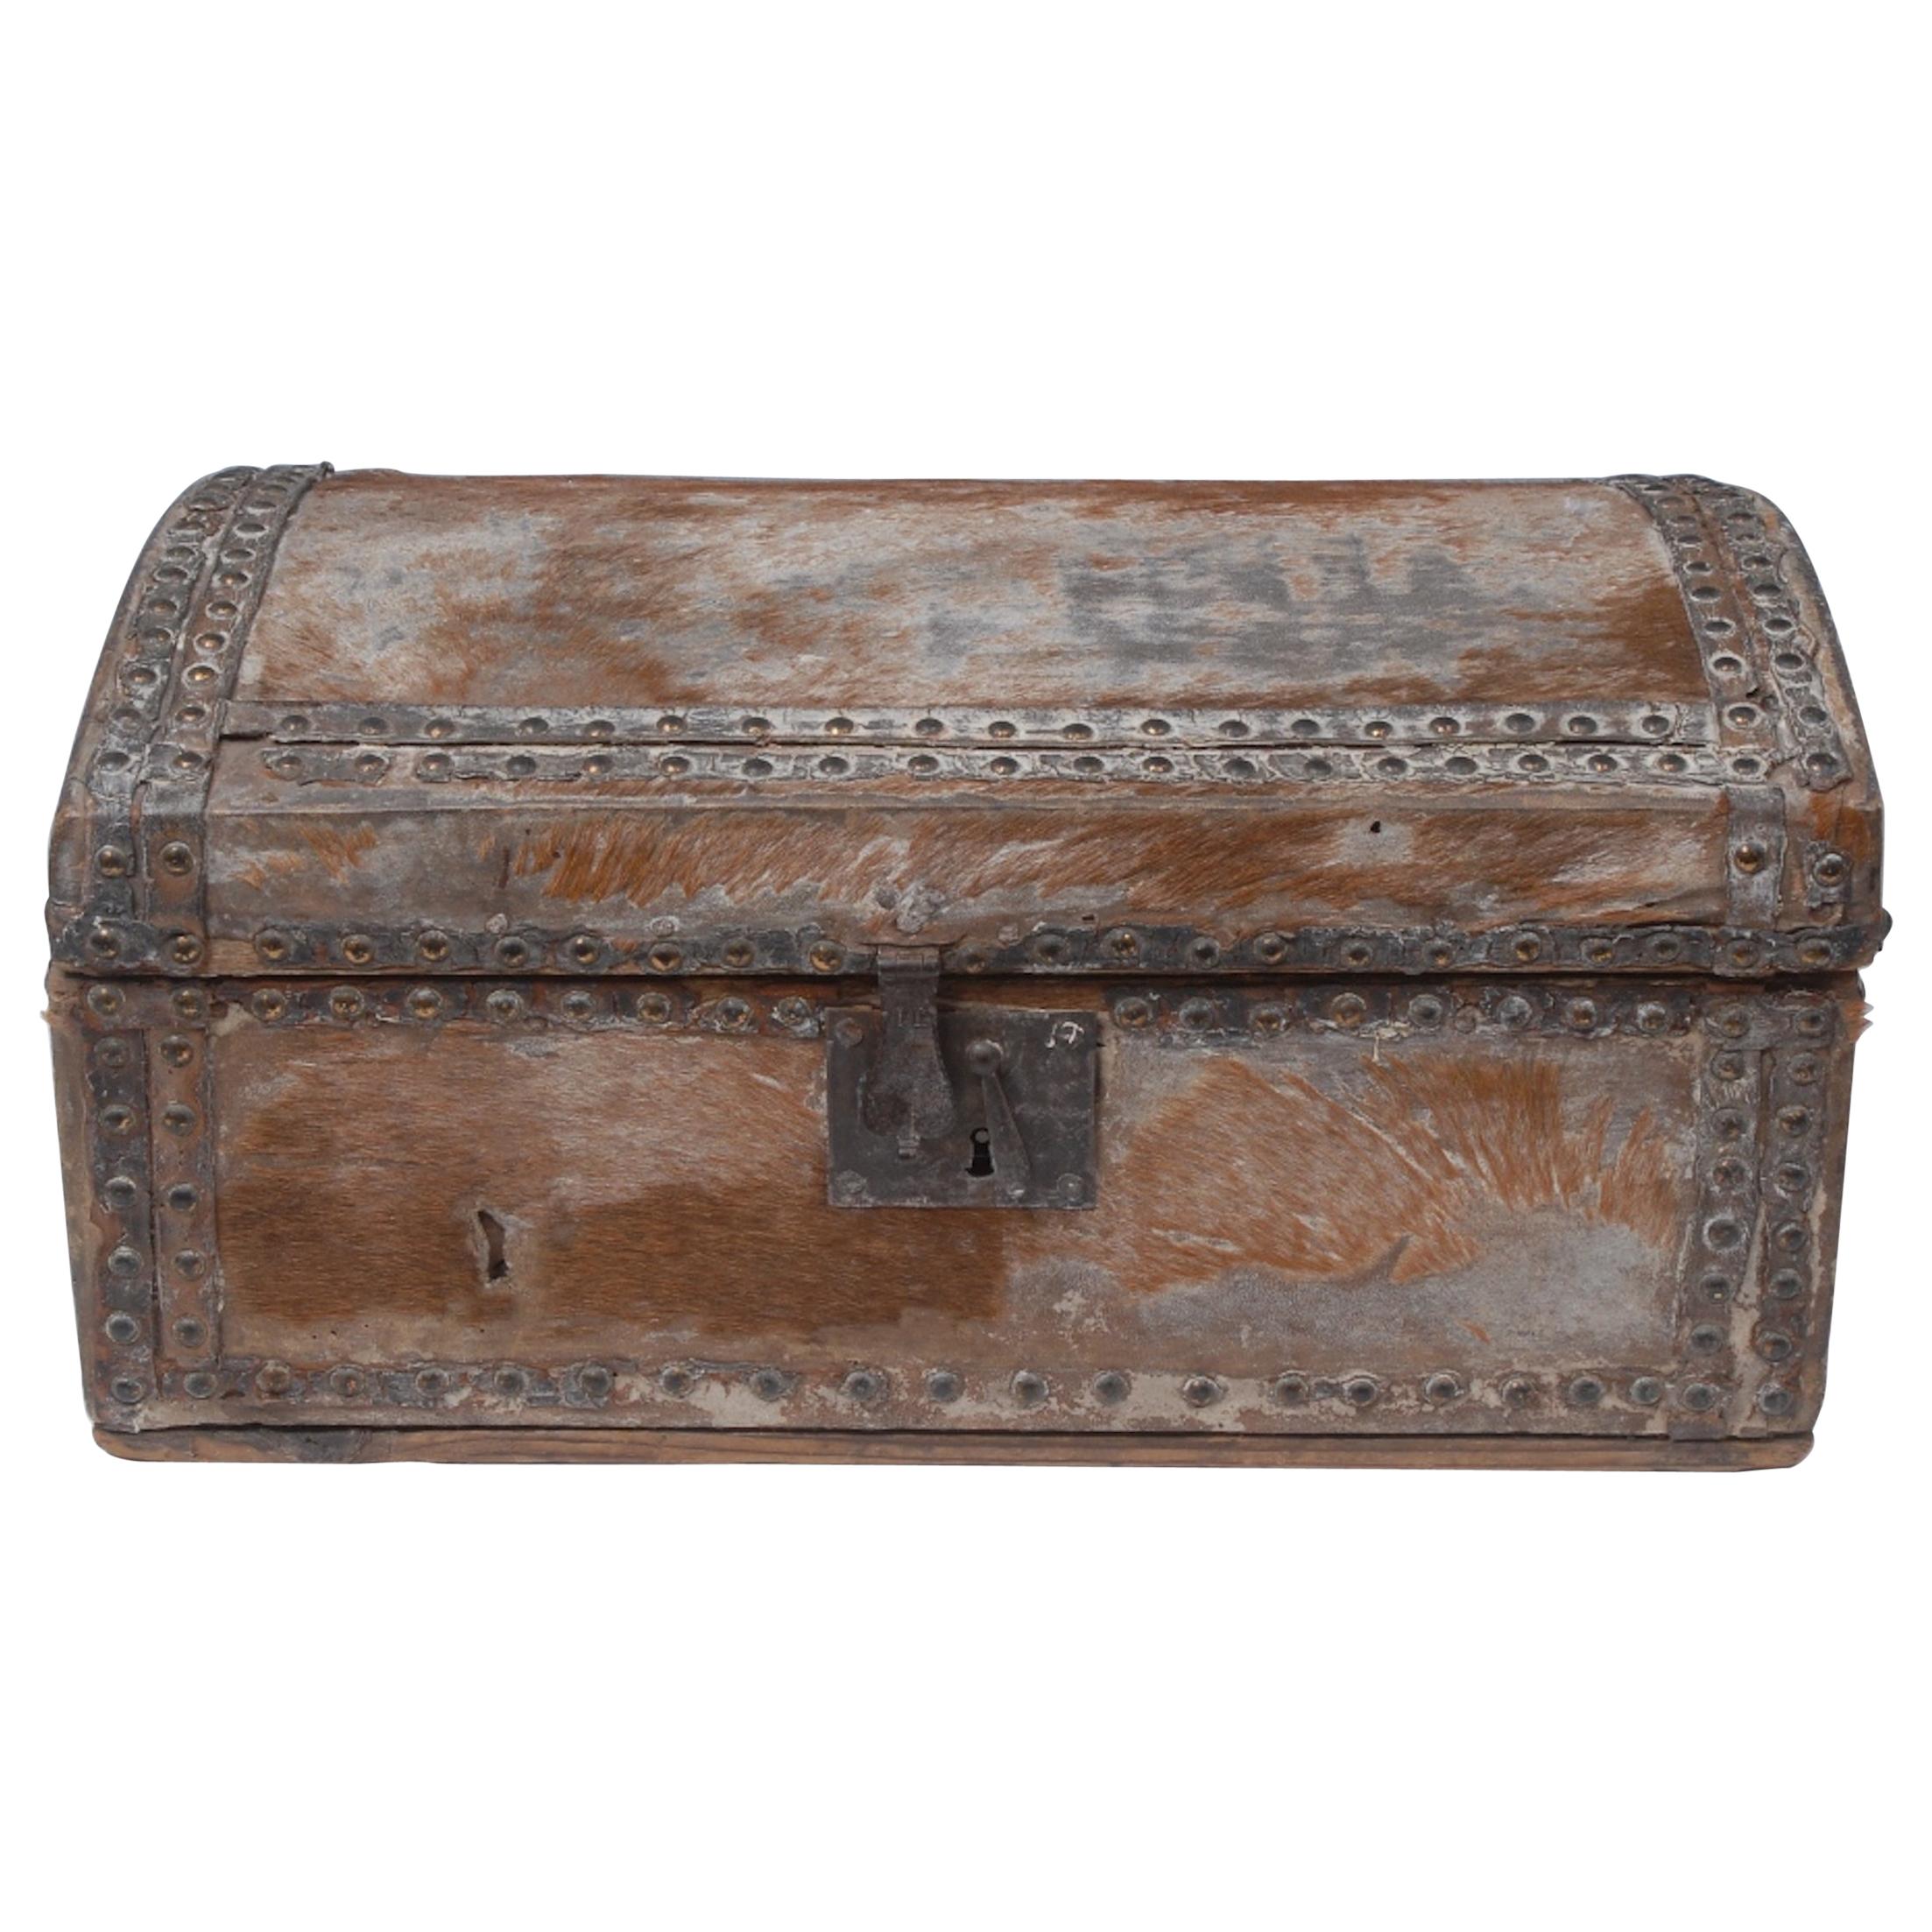 Document Box, 17th Century, English, Vernacular, Pony Skin, Domed